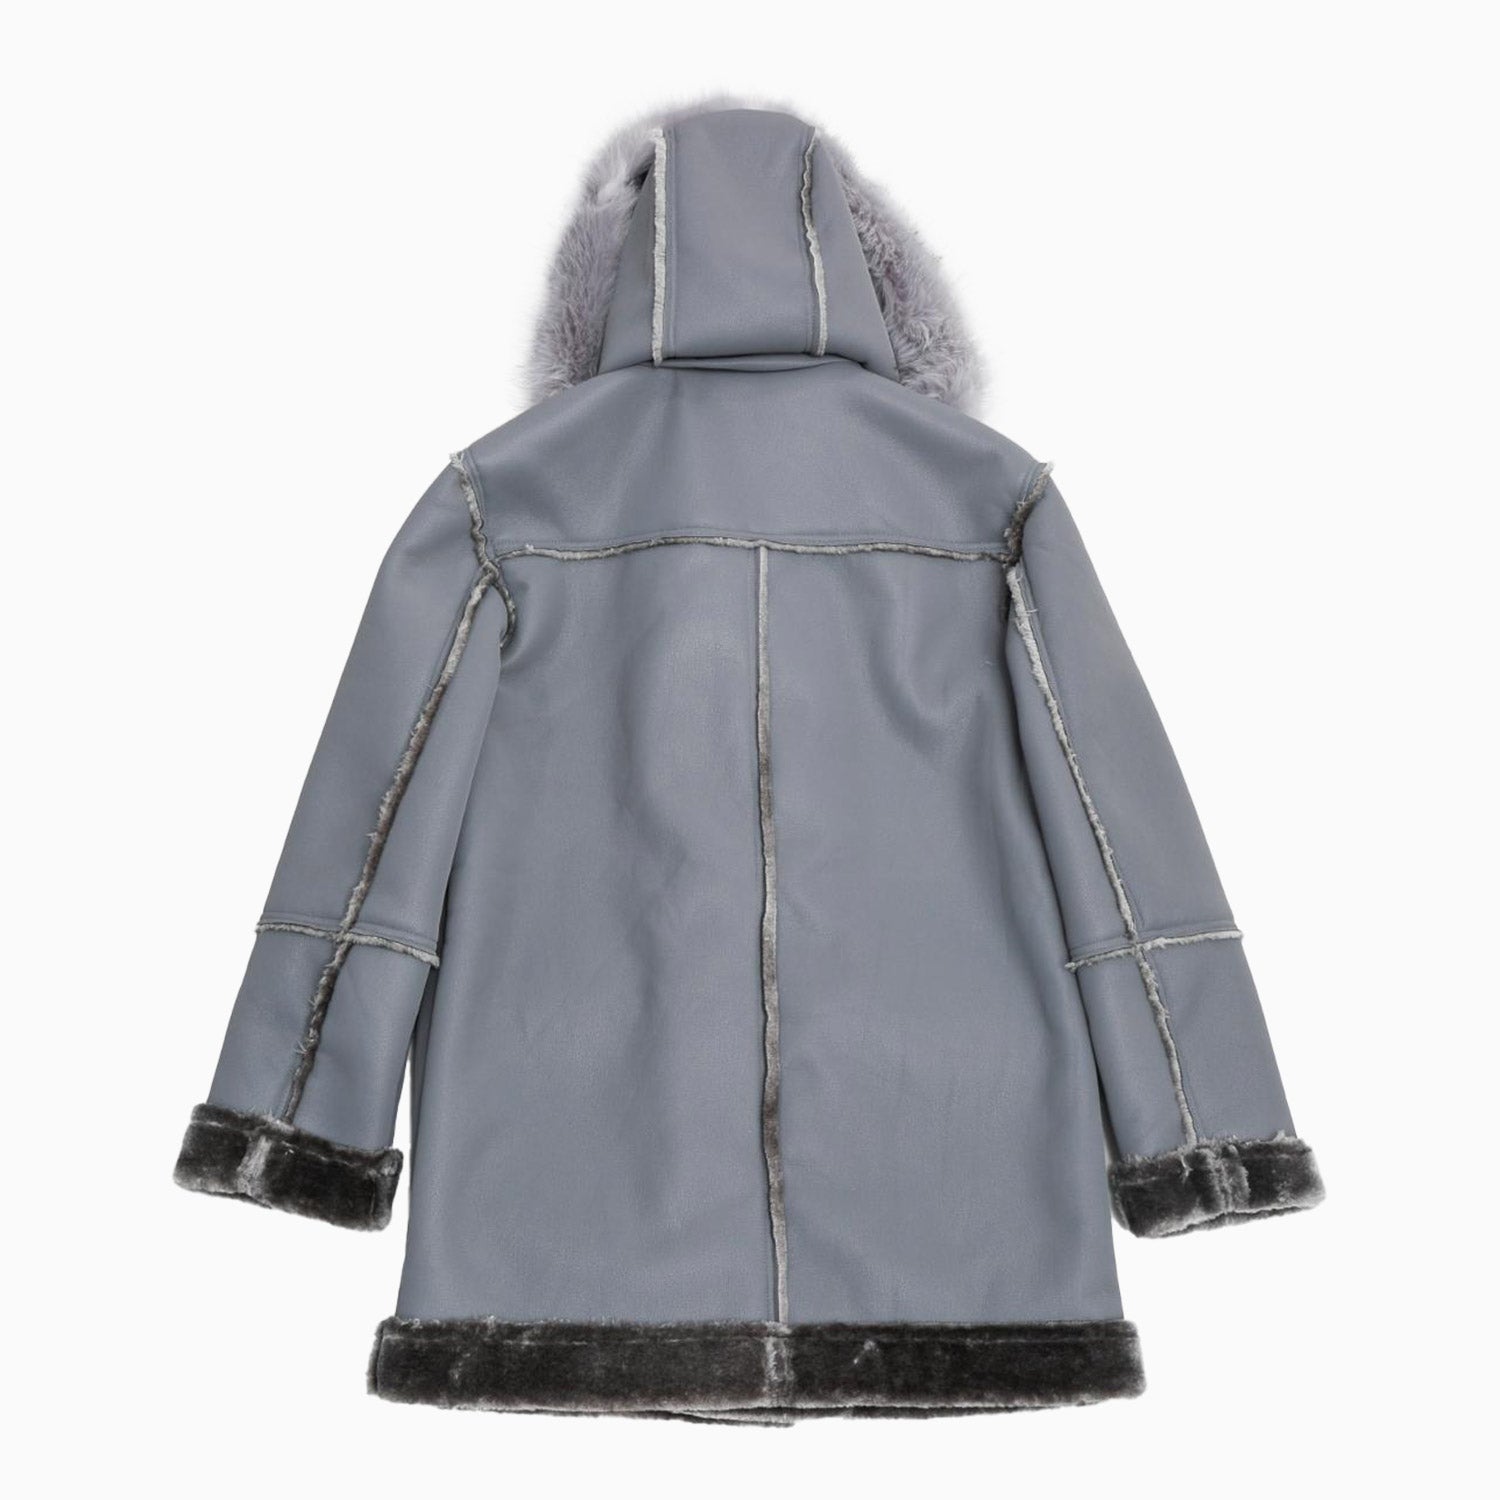 hudson-outerwear-mens-long-shearling-coat-jacket-h6052560-gry